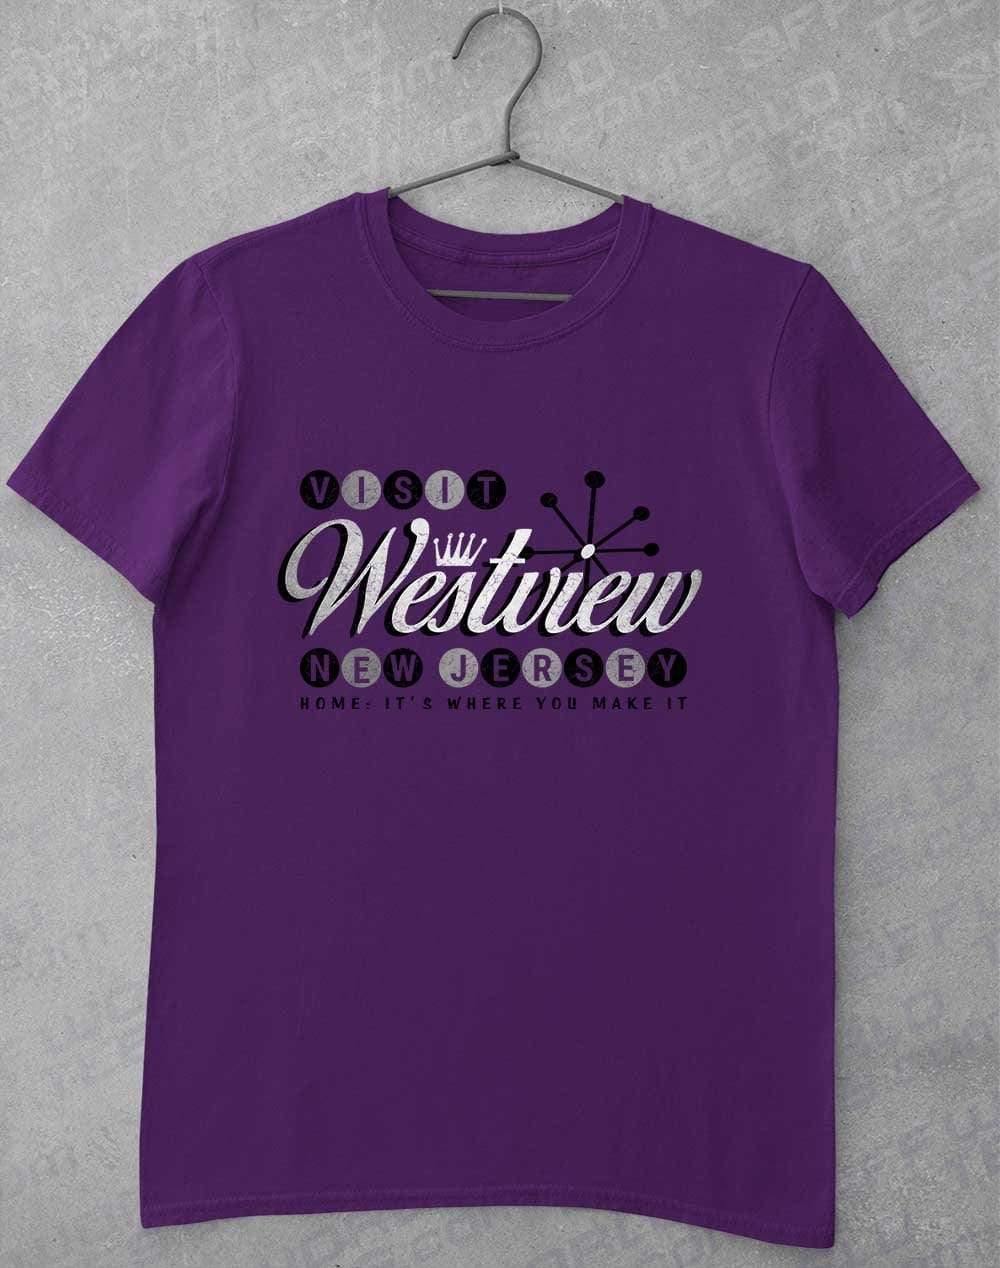 Visit Westview New Jersey T-Shirt S / Purple  - Off World Tees